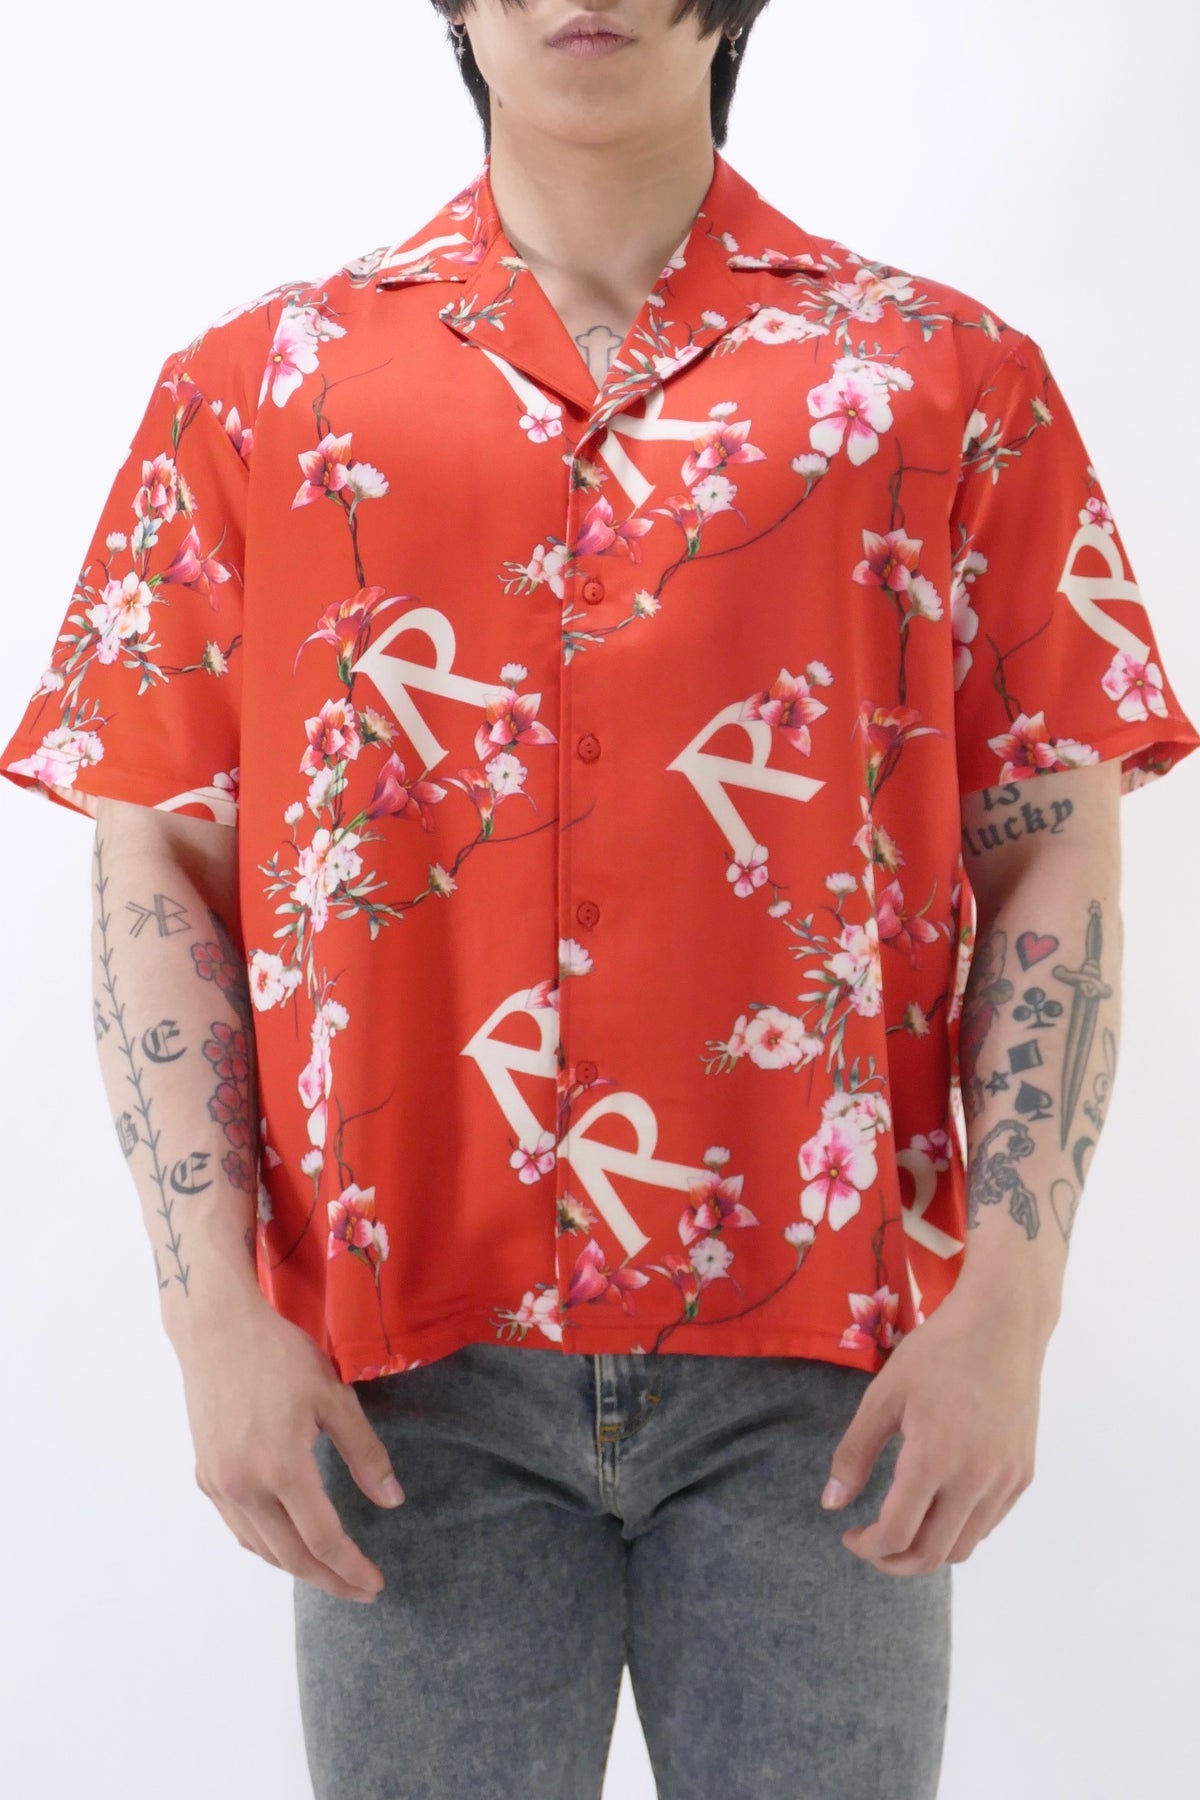 Represent Floral Shirt - Burnt Red